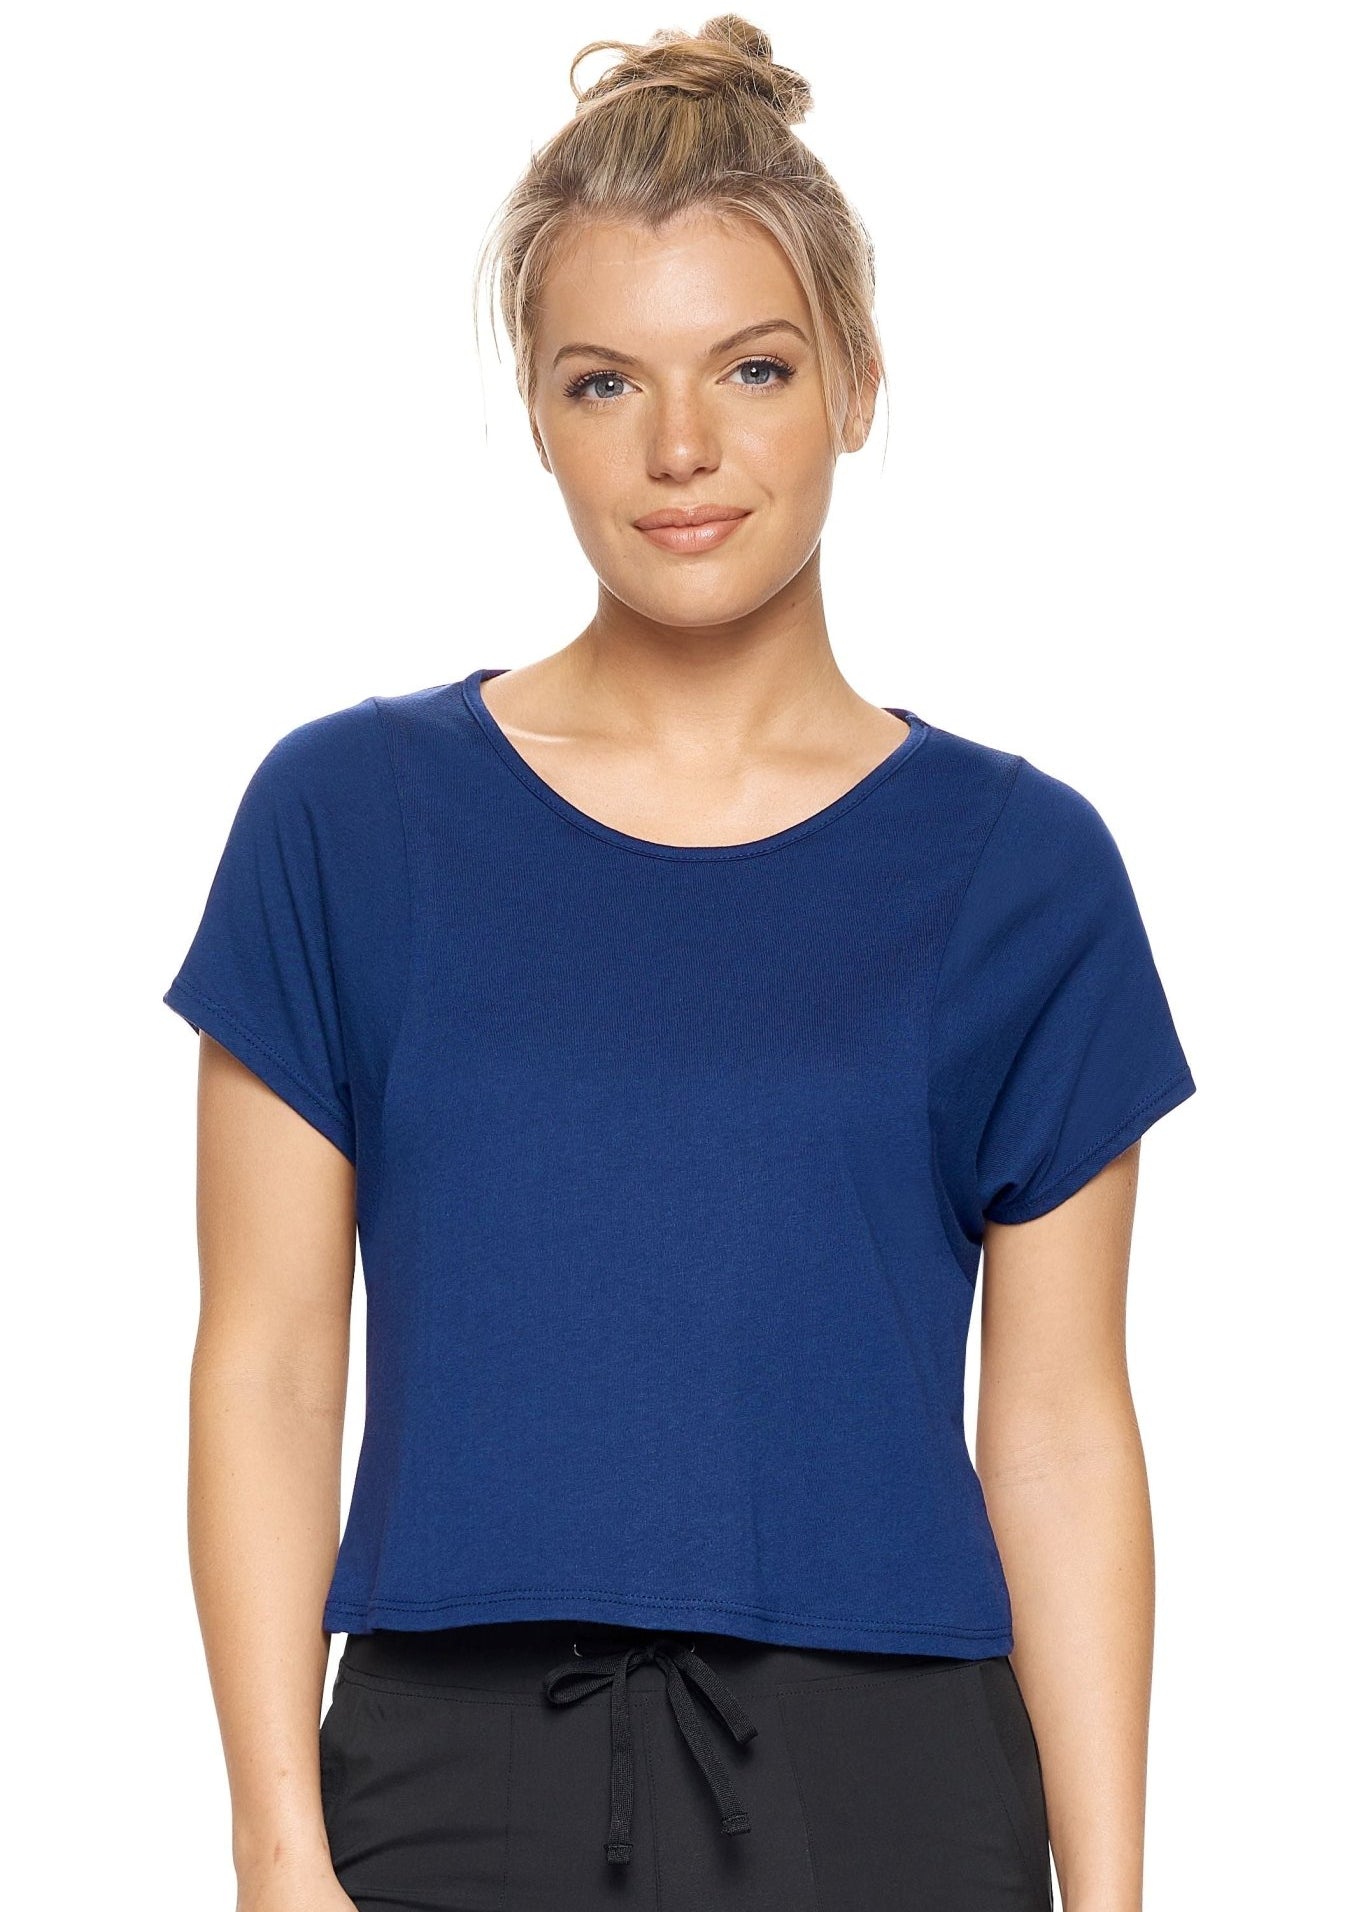 Expert Brand MoCA Plant Based Cropped T-Shirt - Plus - DressbarnActivewear